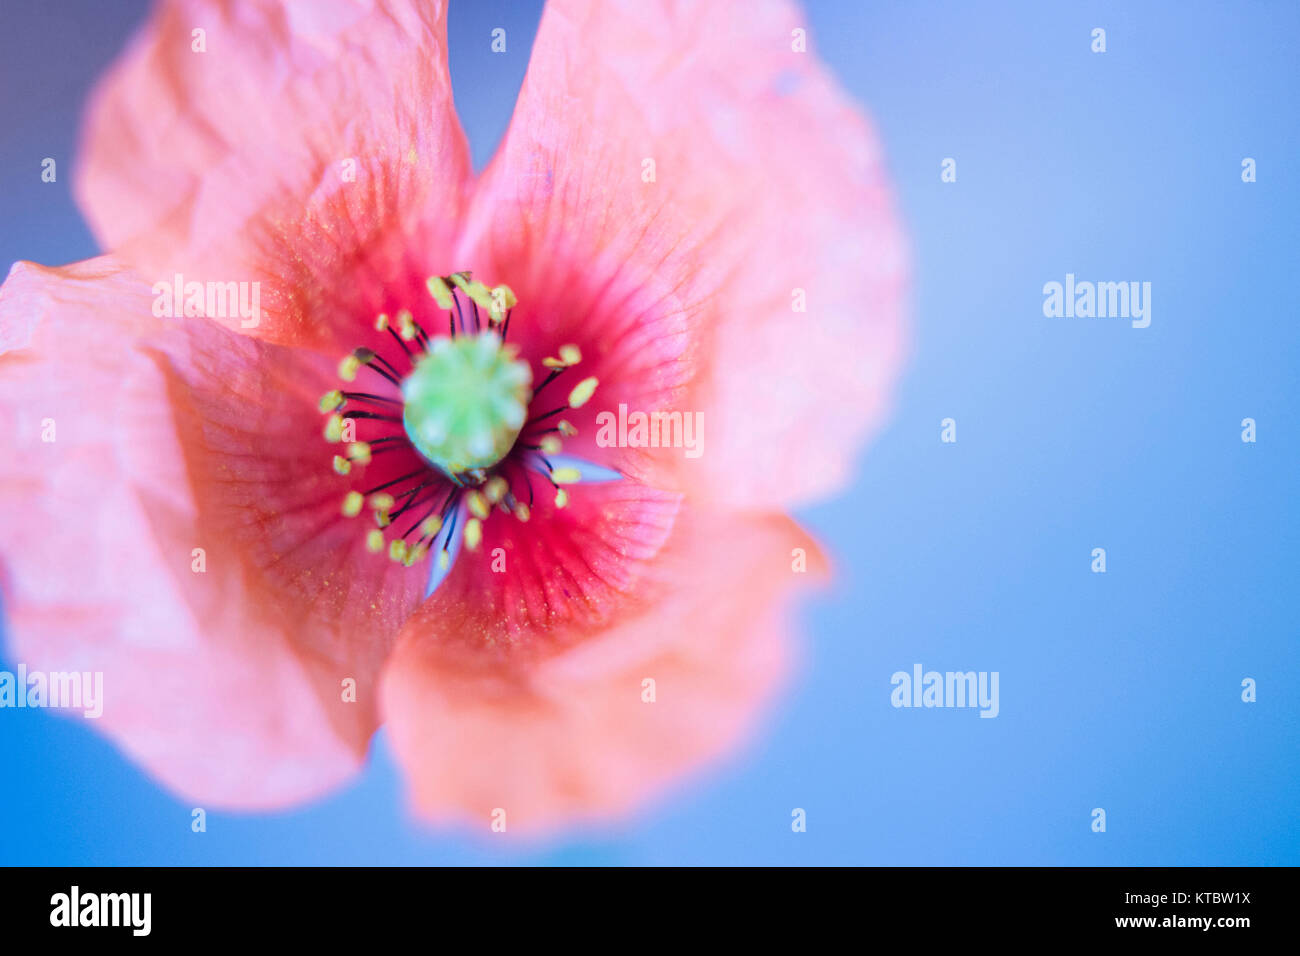 Poppy flower in blue background / soft focus Stock Photo